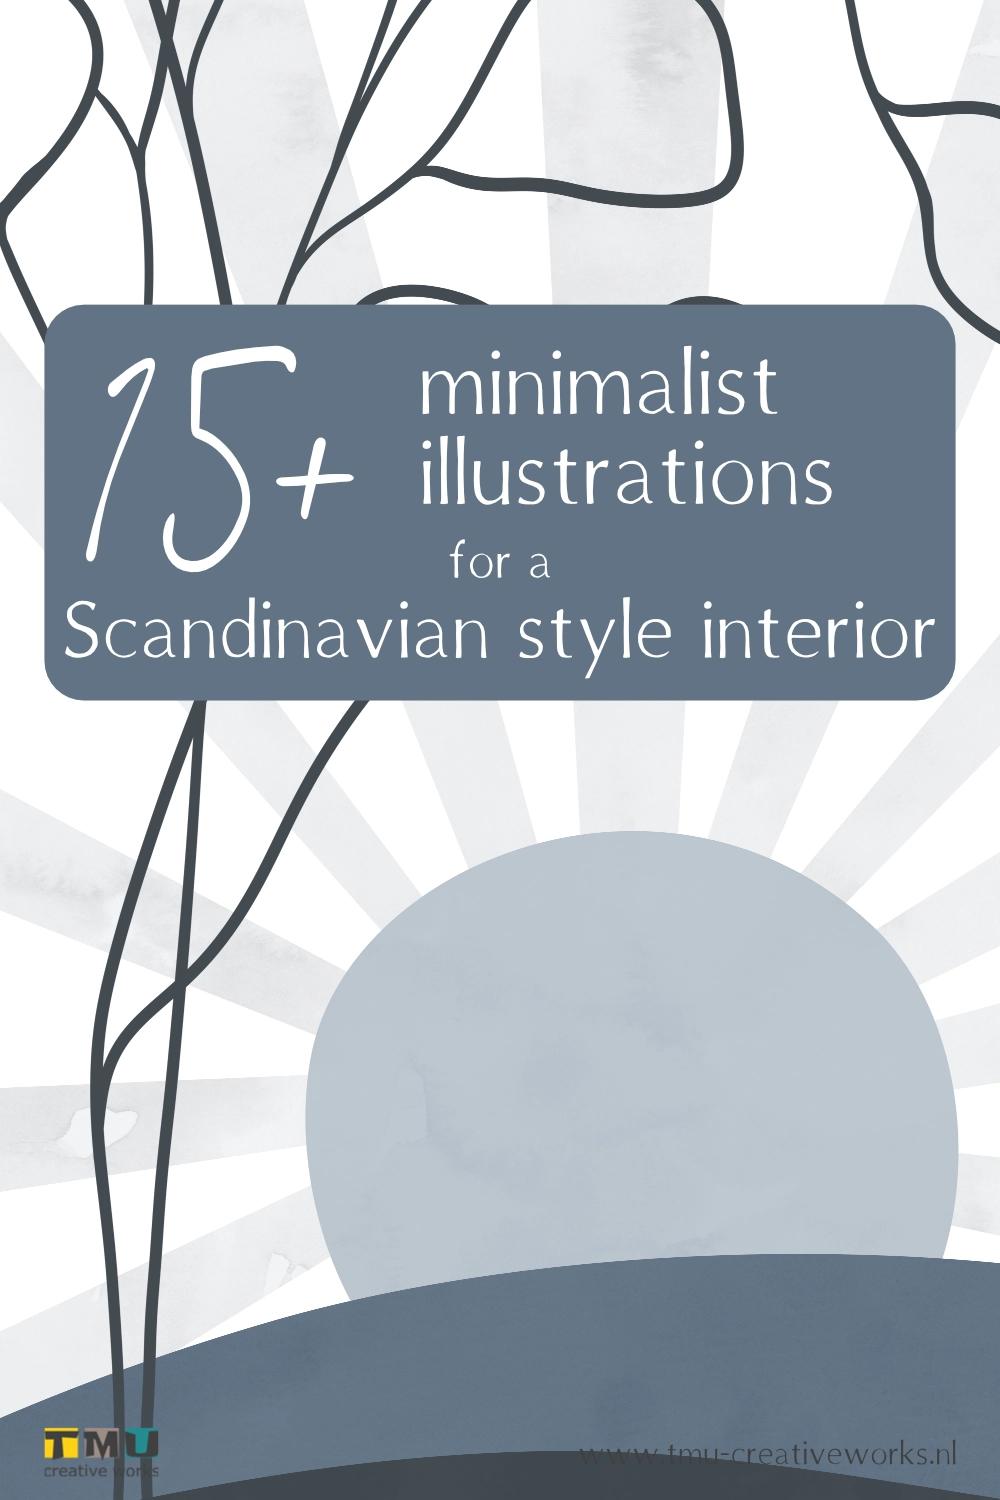 15+ minimalist illustrations for a scandinavian style interior